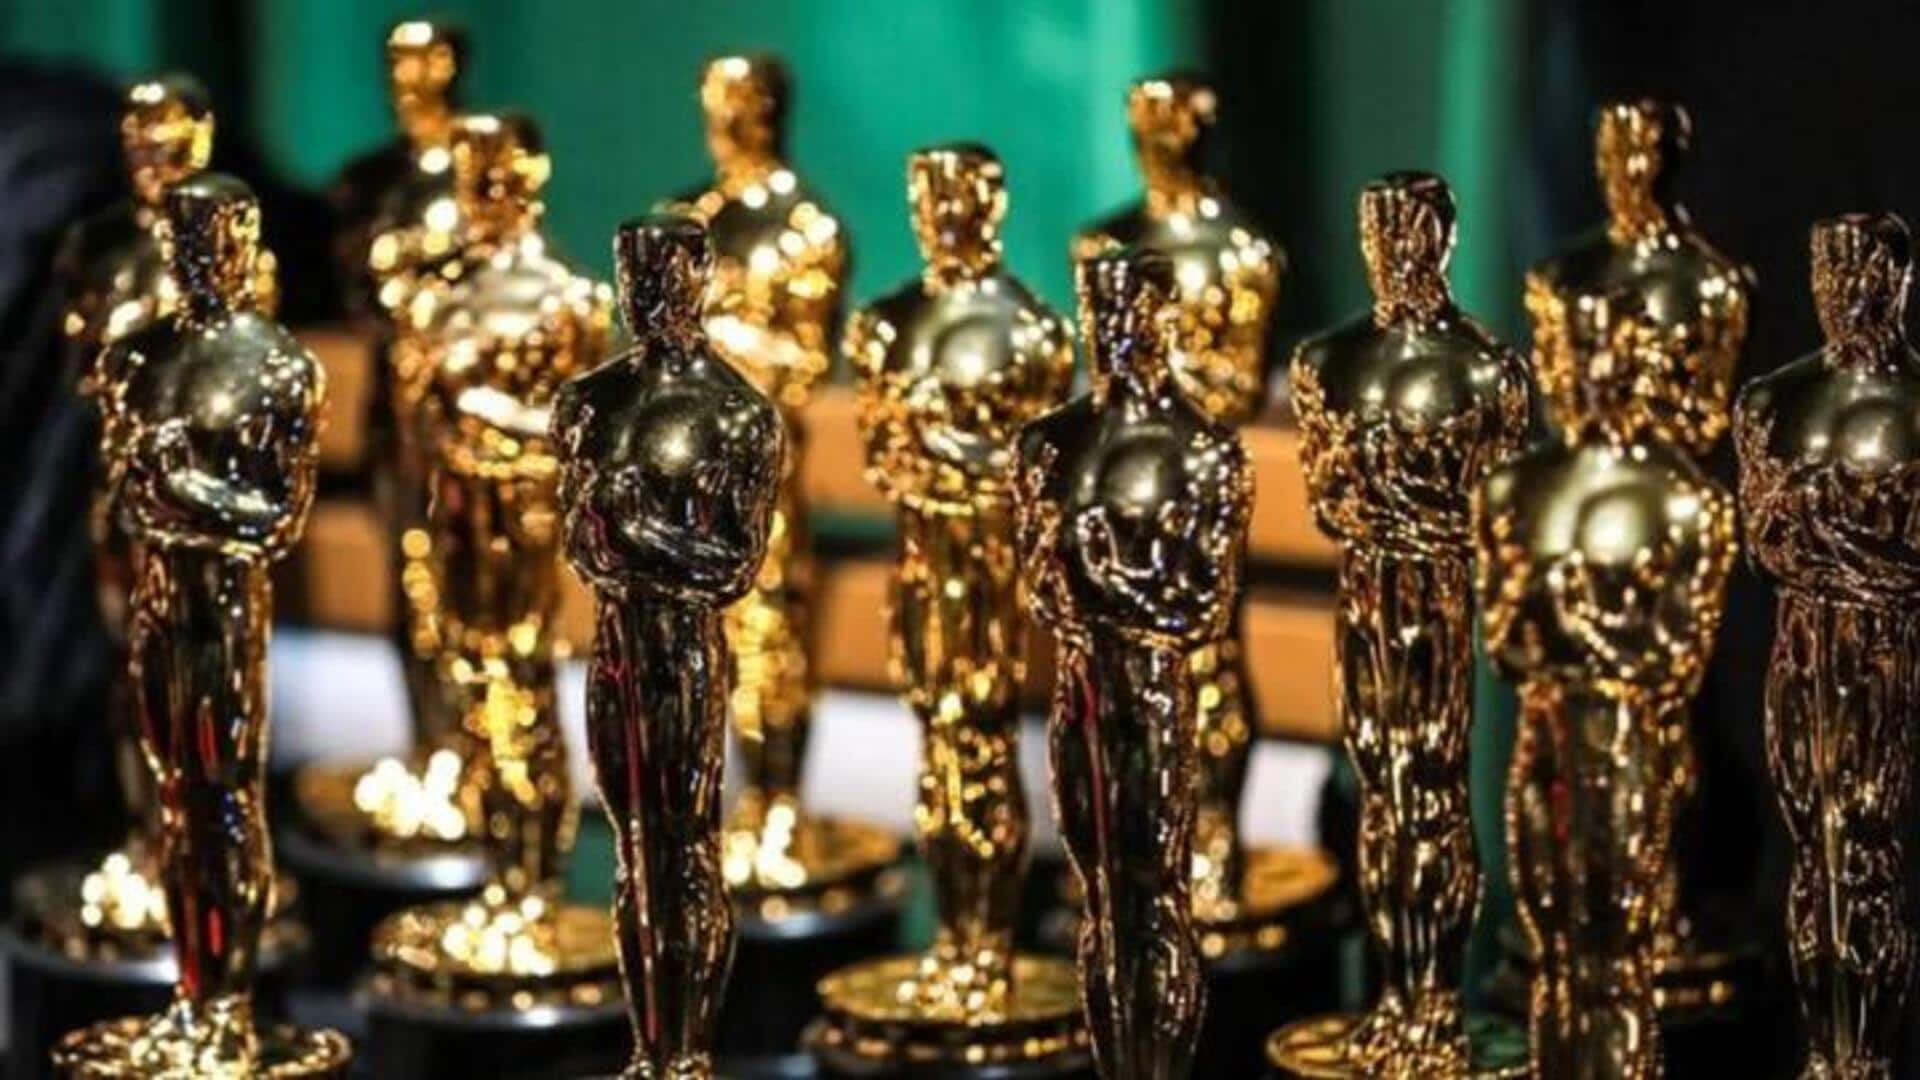 Historical nominations at the upcoming 96th Academy Awards